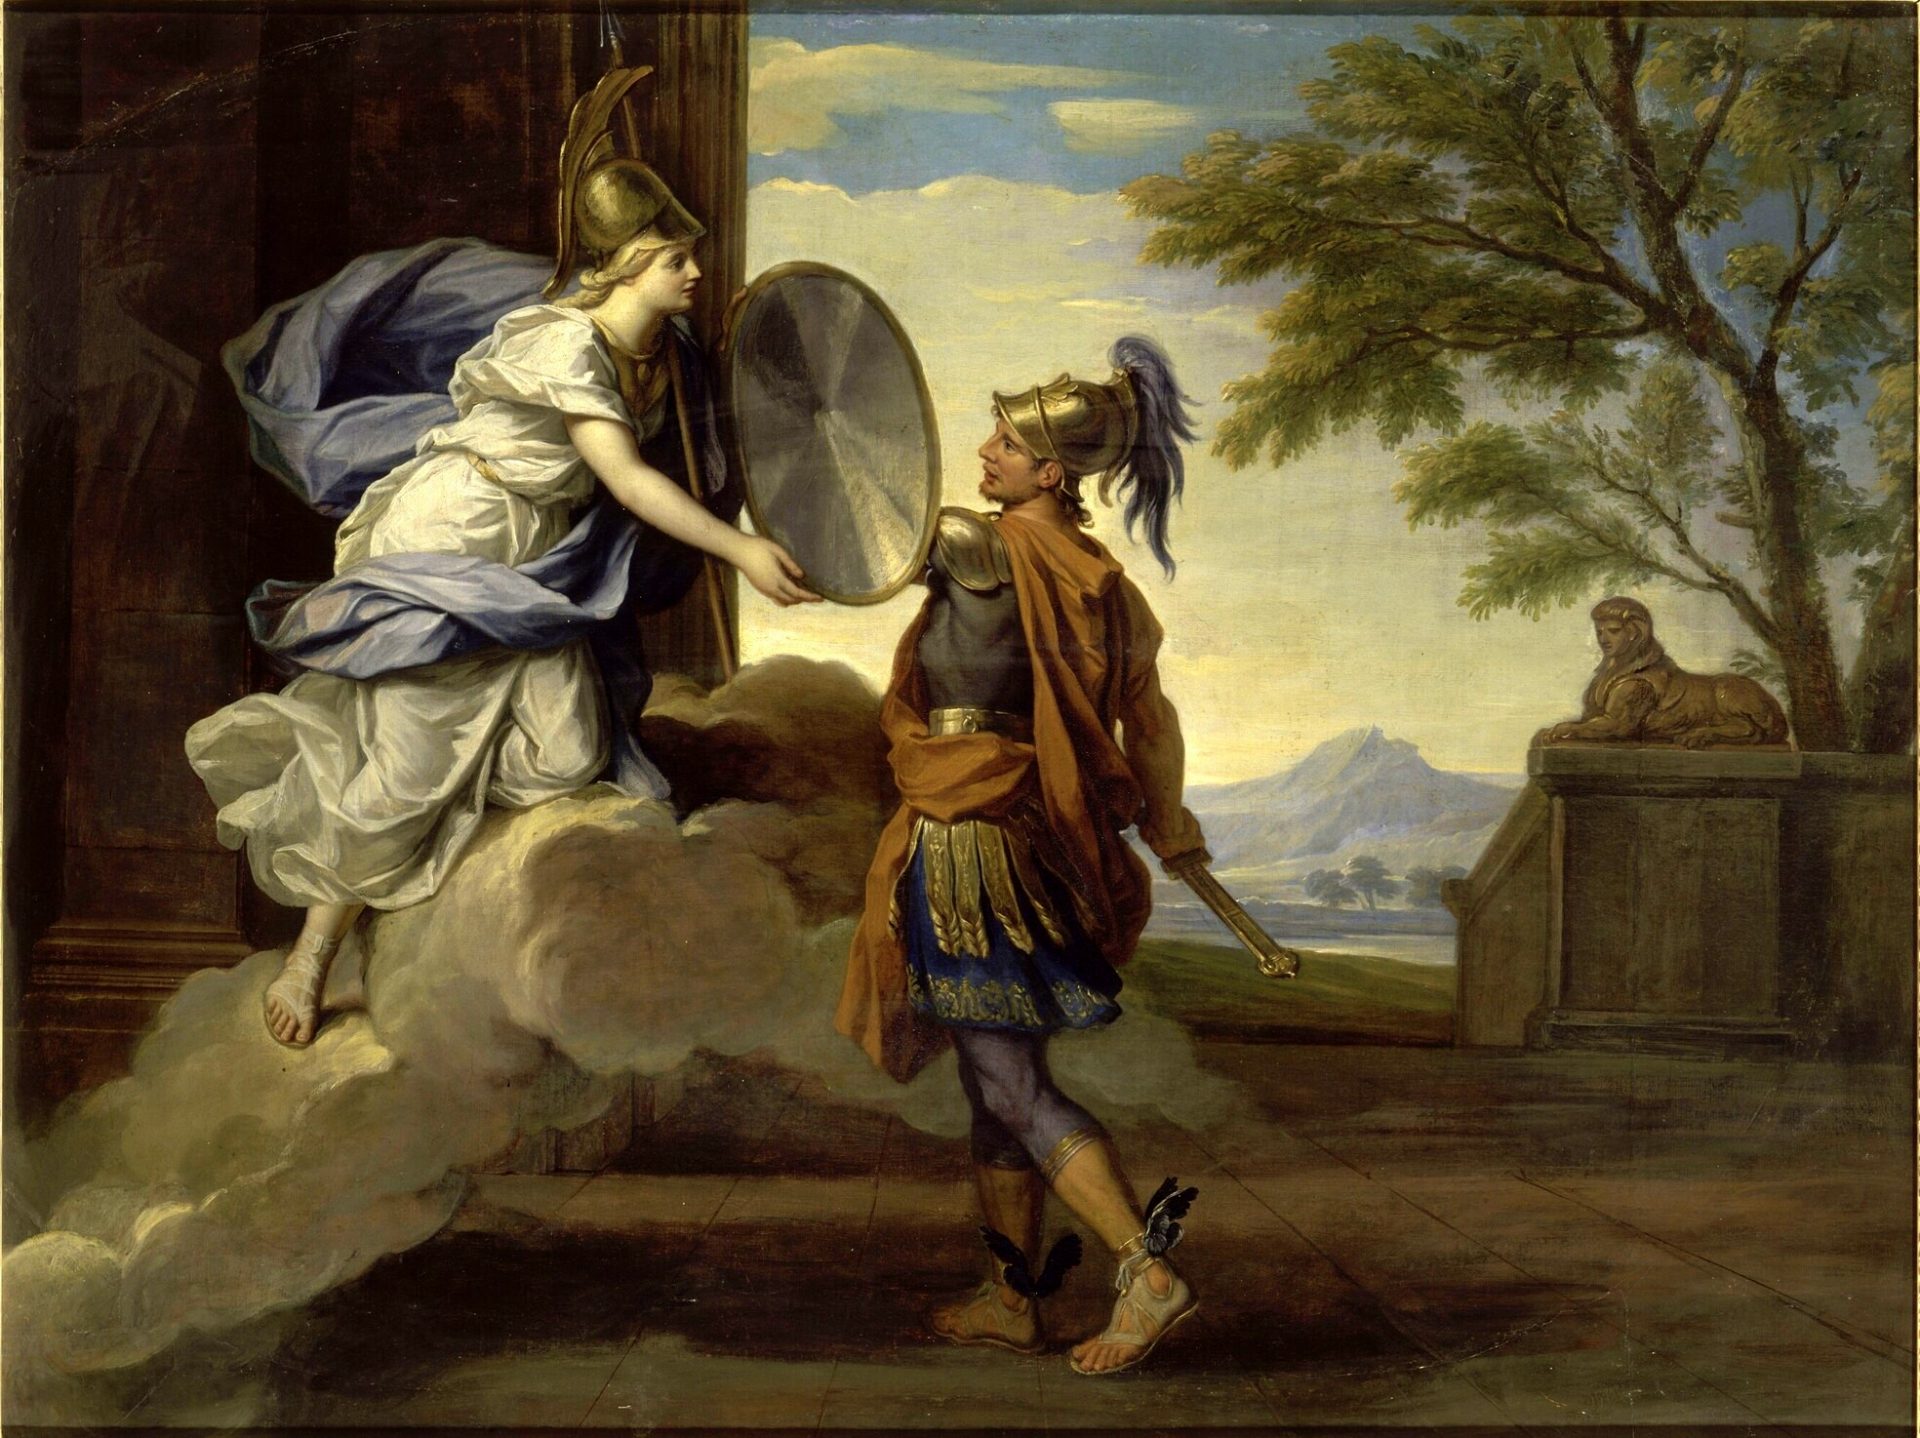 The Greek goddess Minerva is handing her shield to Perseus.